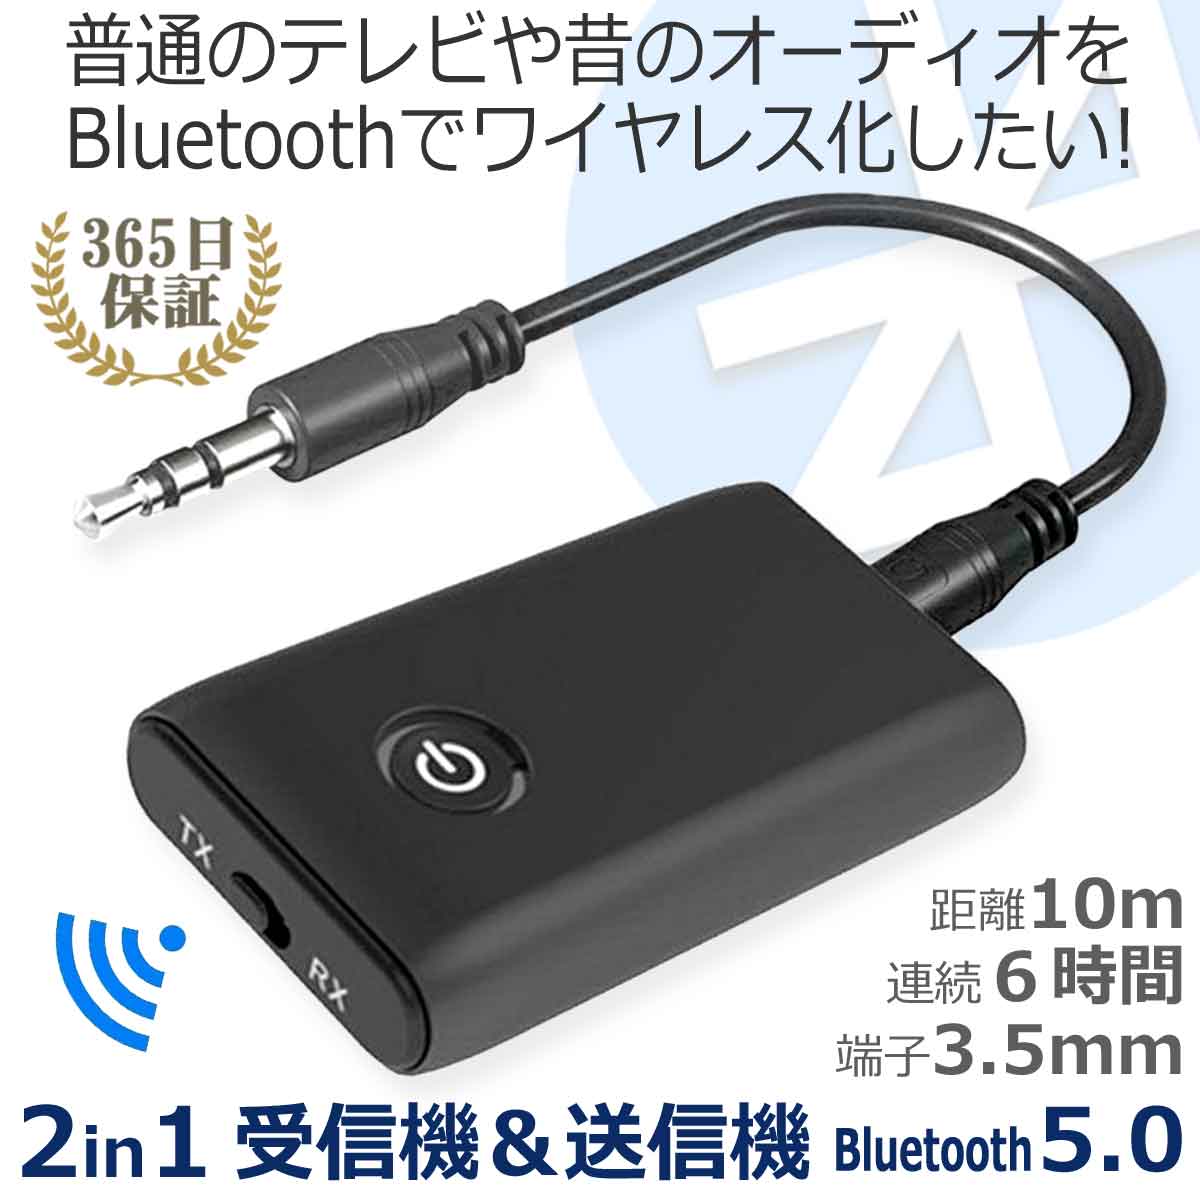 Bluetooth 5.0 オーディオ トランスミッター レシーバー 送信機 受信機 ワイヤレス ブルートゥース 後付け 送受信 無線 接続機  3.5mm AUX 端子 音声 :BTHRecTrn-B10S:アリージェム 通販 